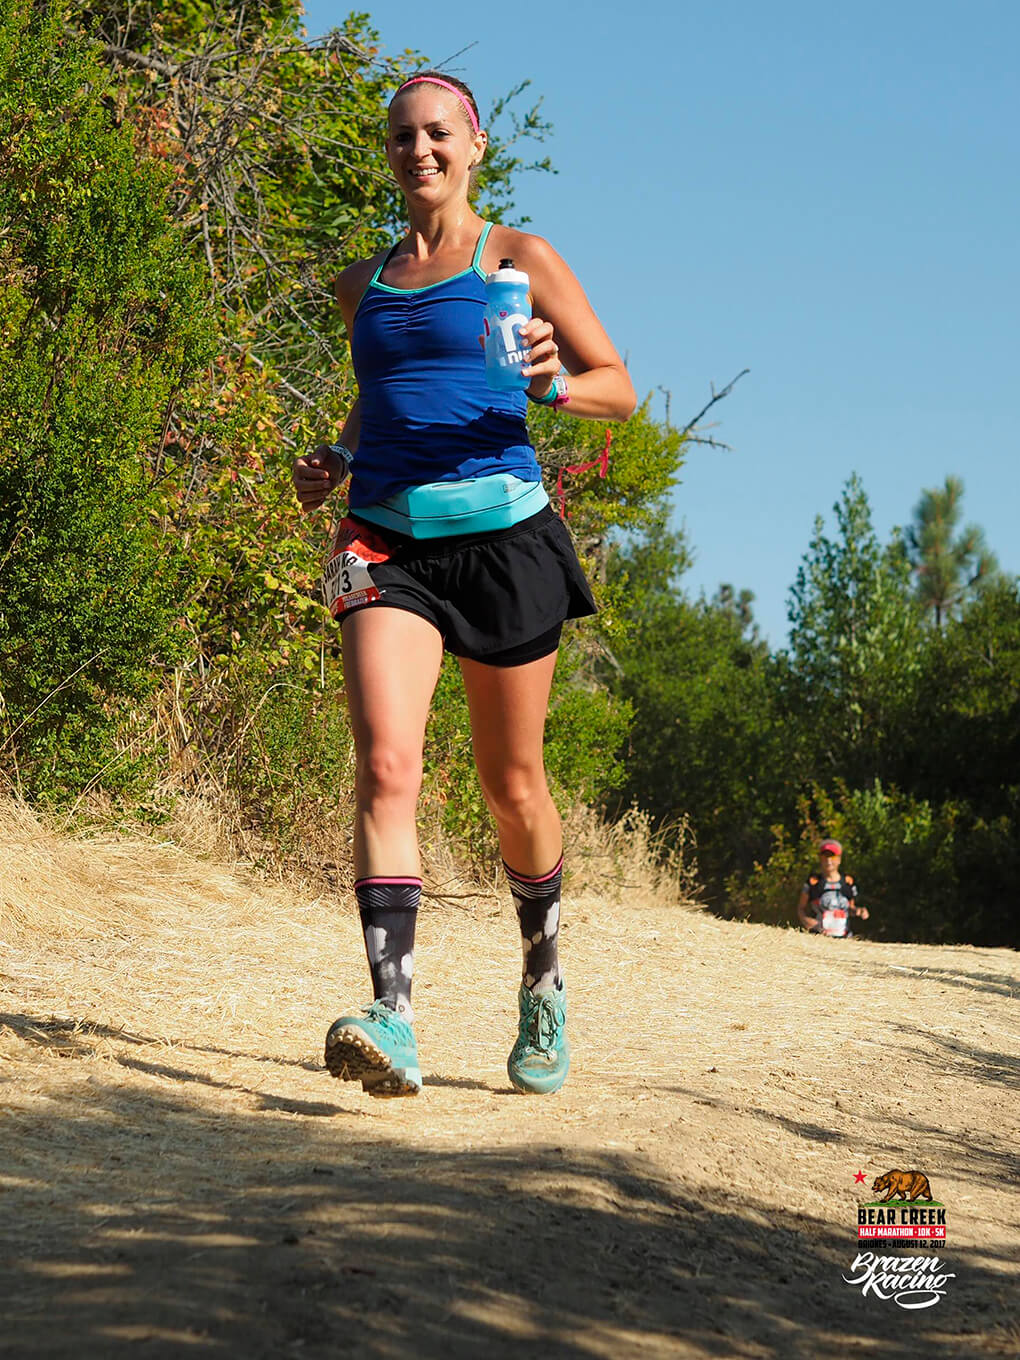 Brazen Trail Racing sarahkayhoffman.com Bear Creek Trail Running Sarah Kay Hoffman The Rules of Running #run #running #trailrunning